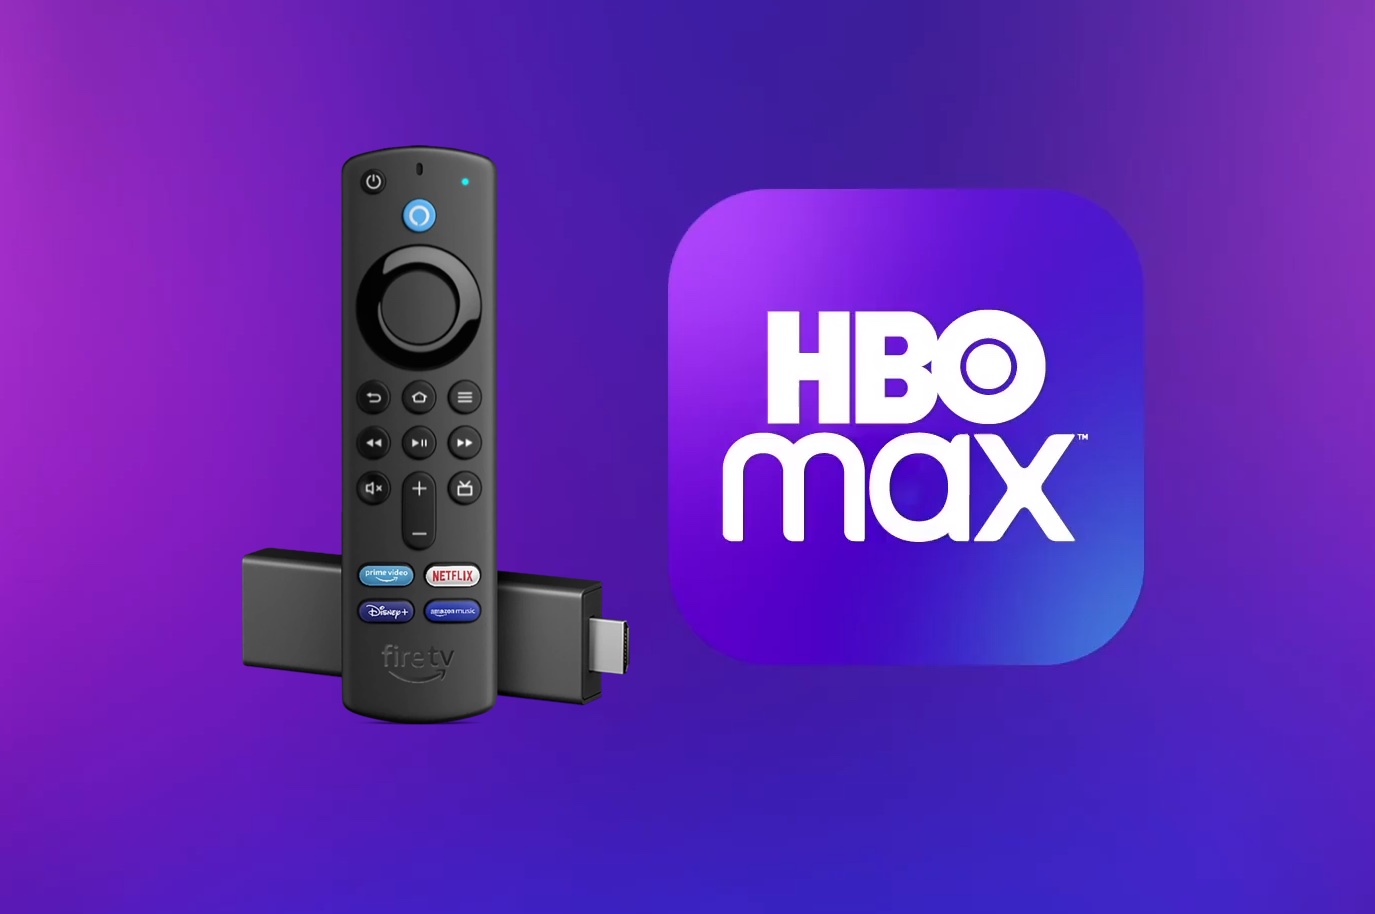 HBO Max en Fire TV